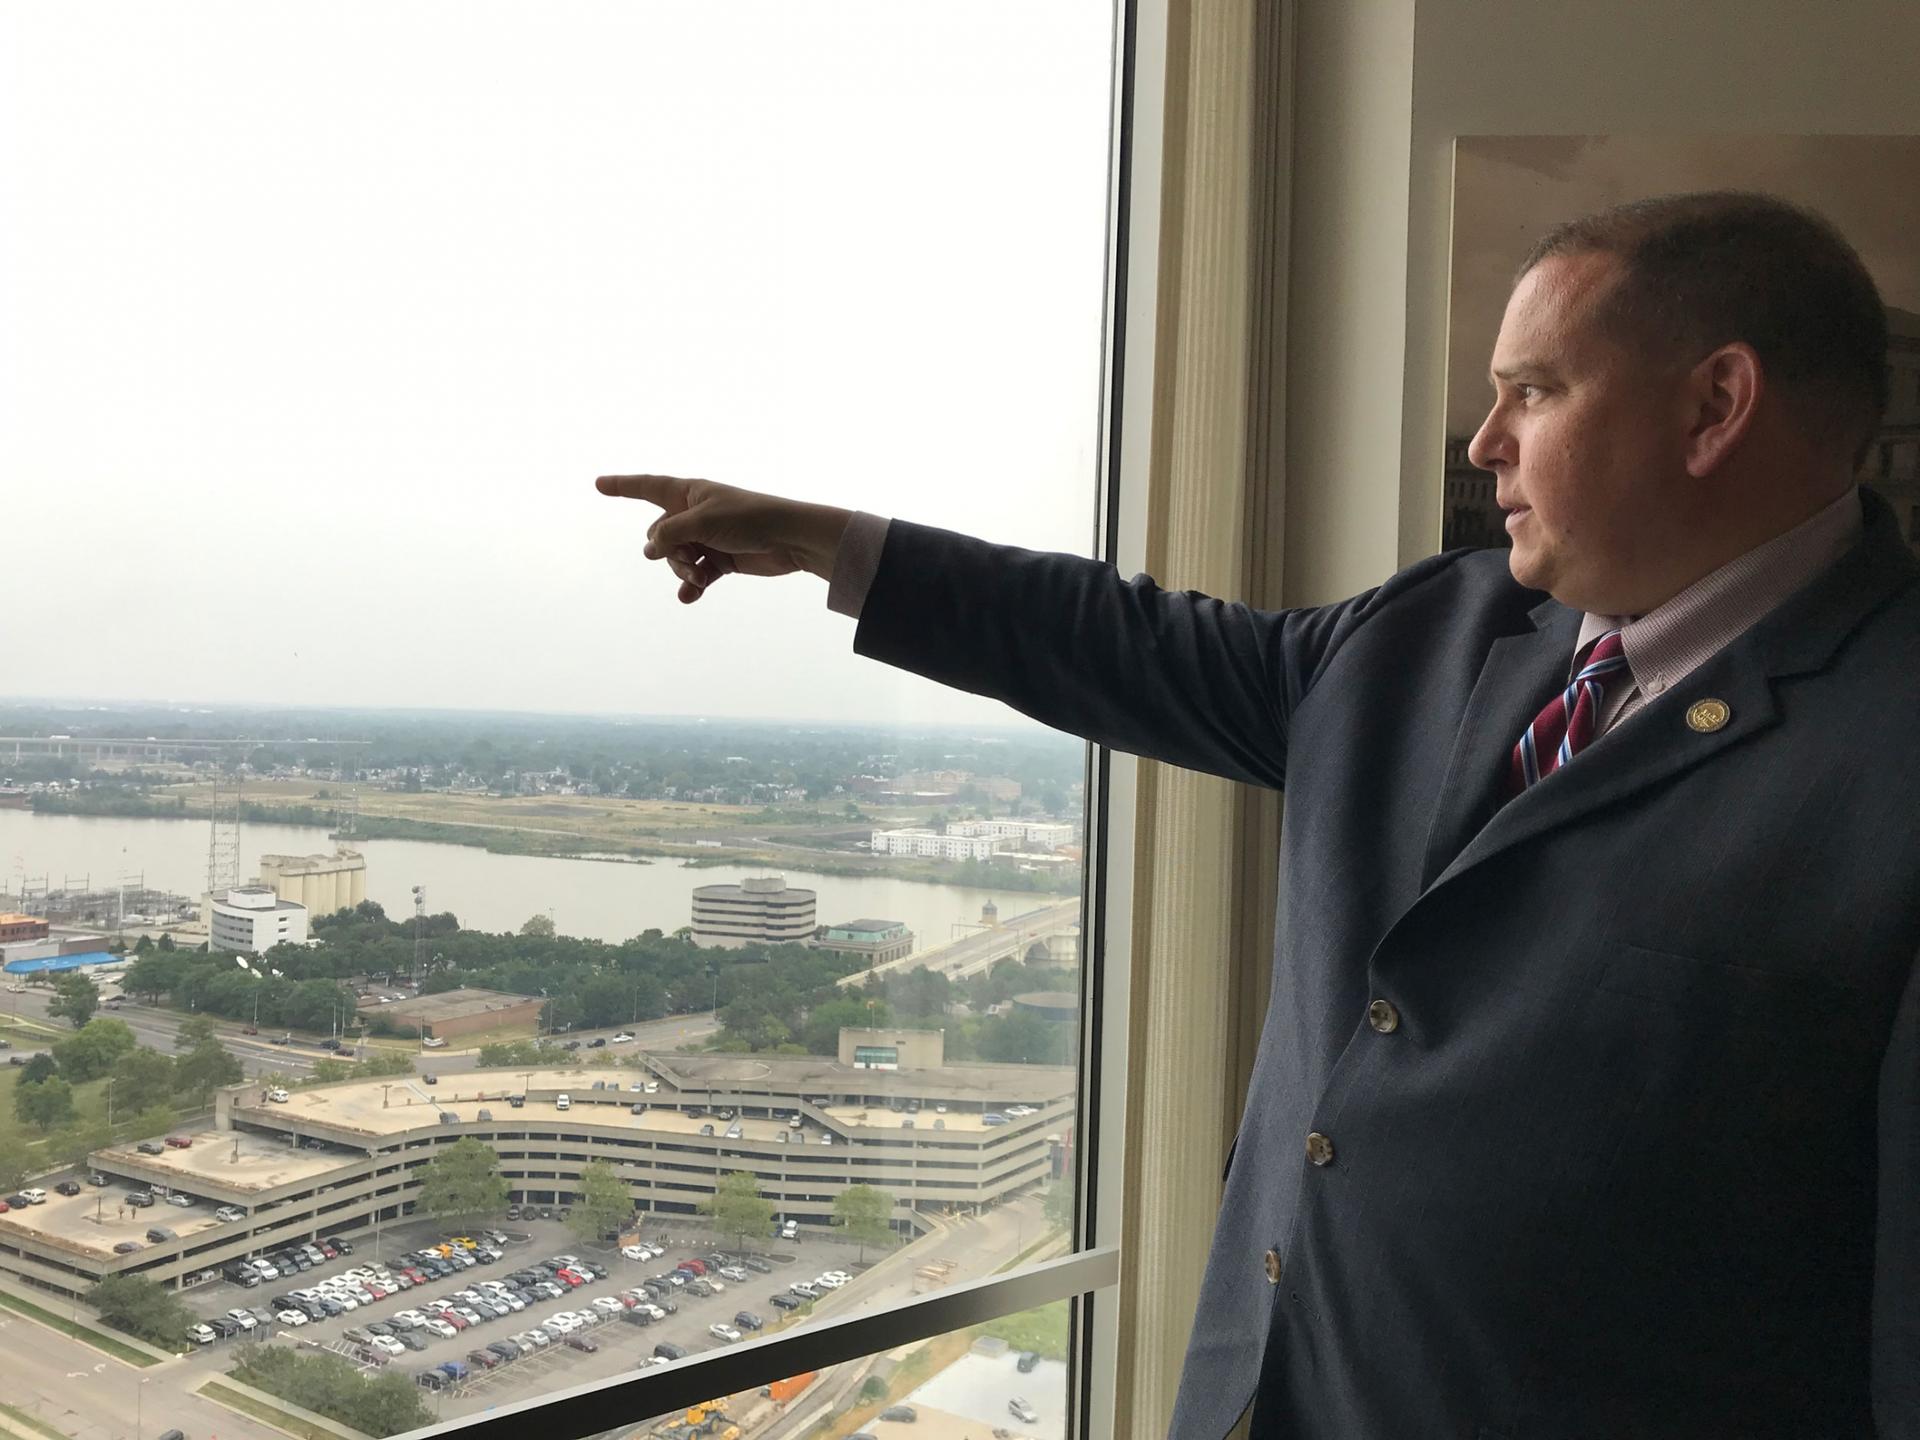 Toledo Mayor Wade Kapszukiewicz is shown wearing a dark suit standing at a window point out.